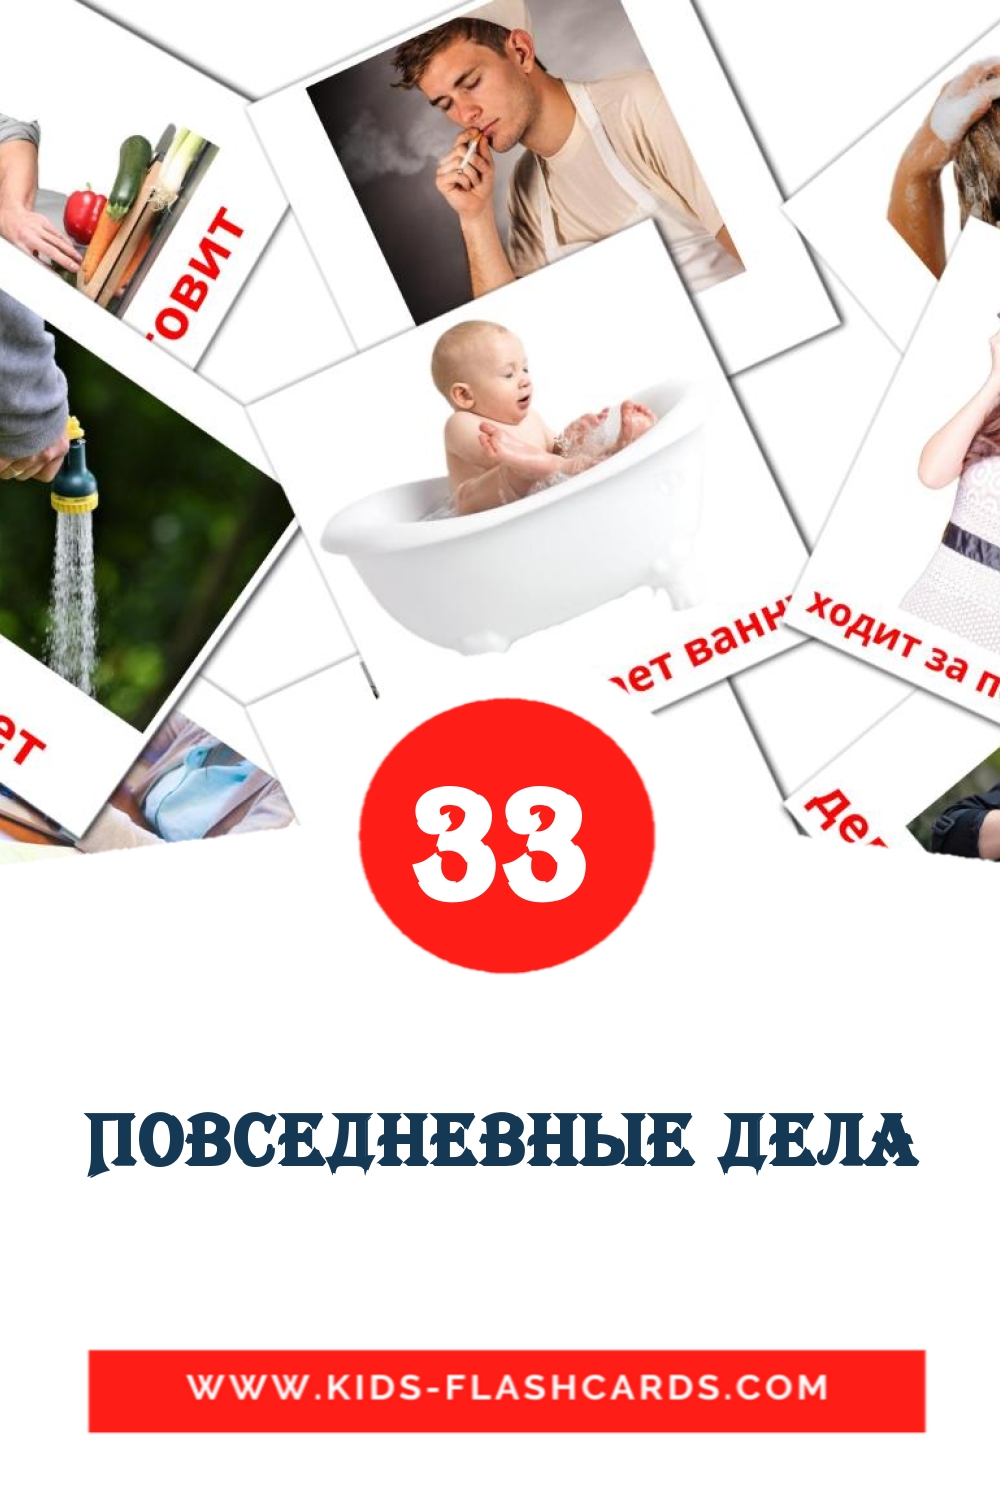 33 carte illustrate di Повседневные дела per la scuola materna in russo